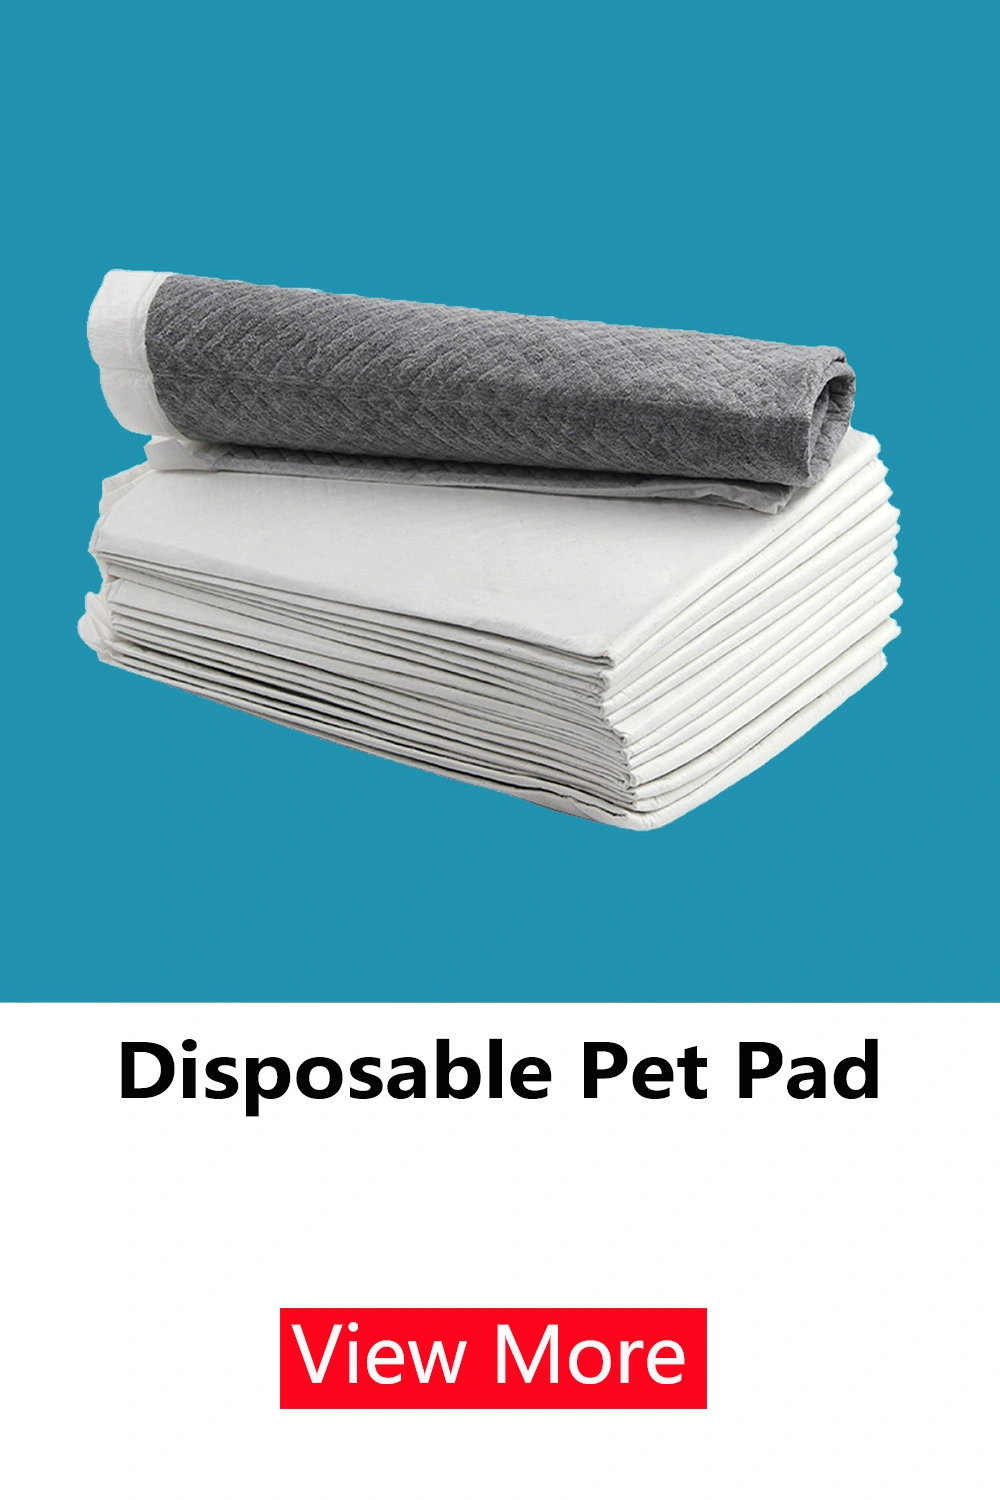 disposable pet pad picture